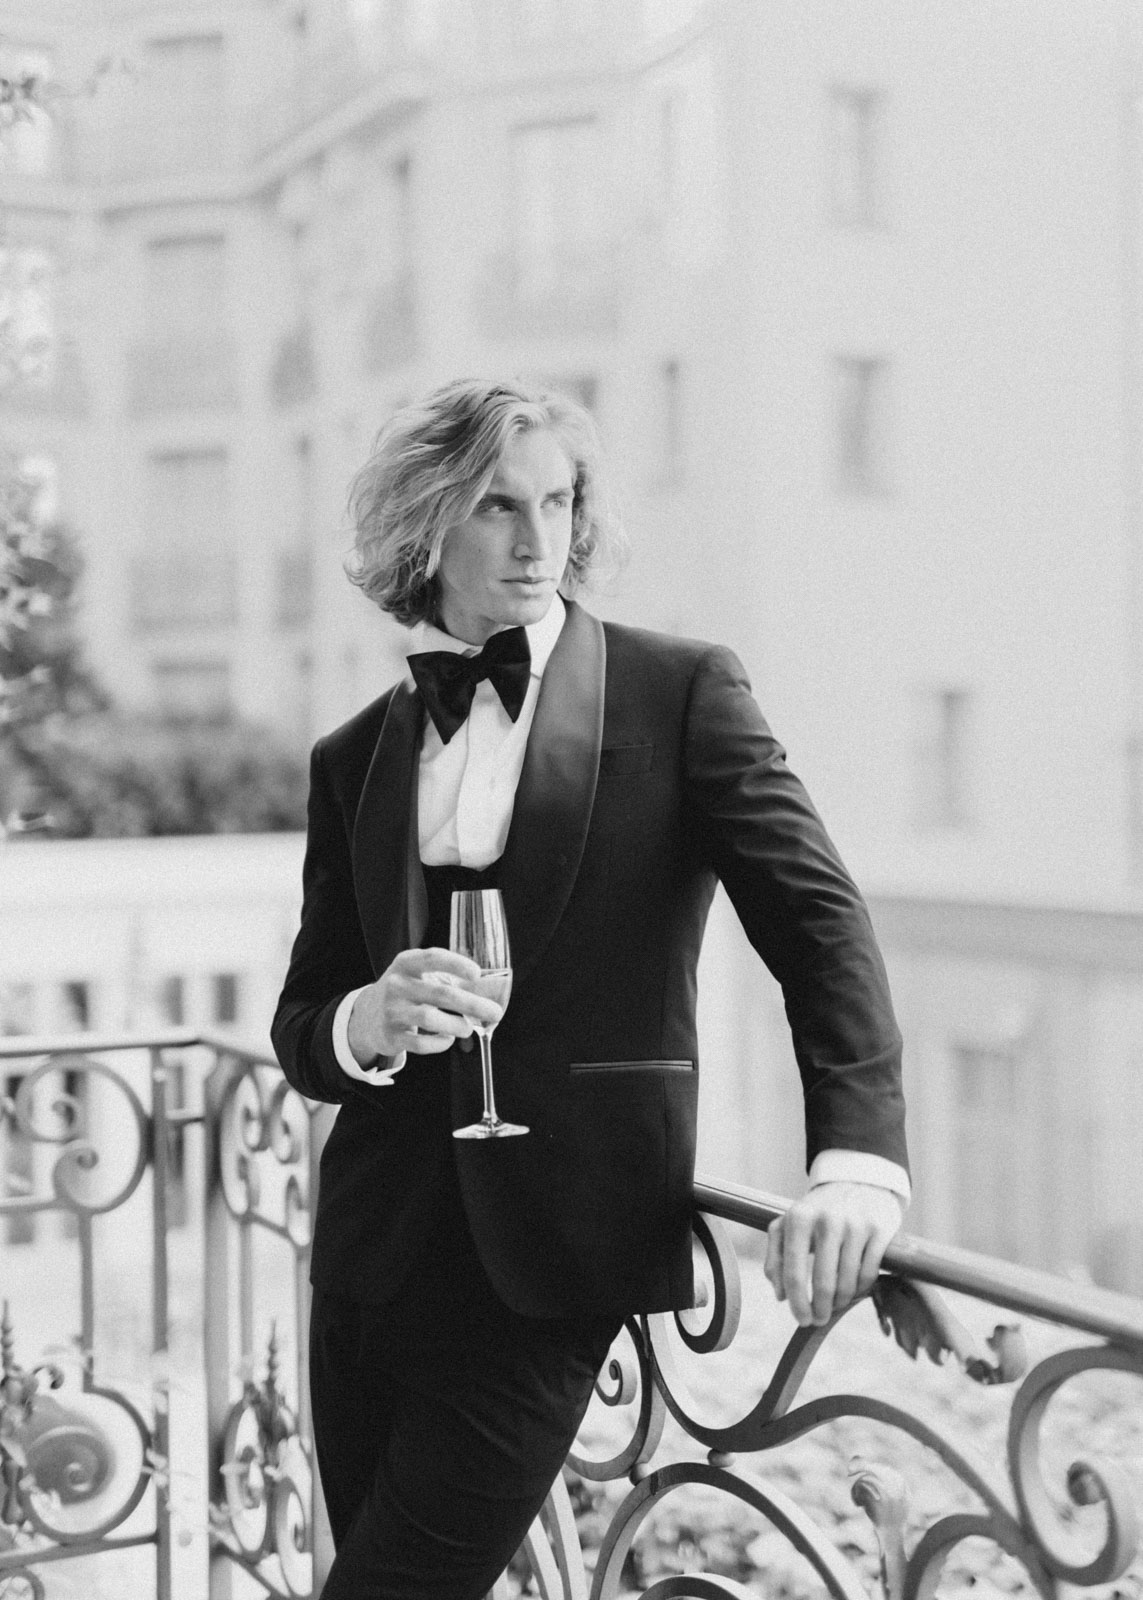 Luxury Ritz Paris Wedding Photos | Chernogorov Photography Destination Wedding Photographers